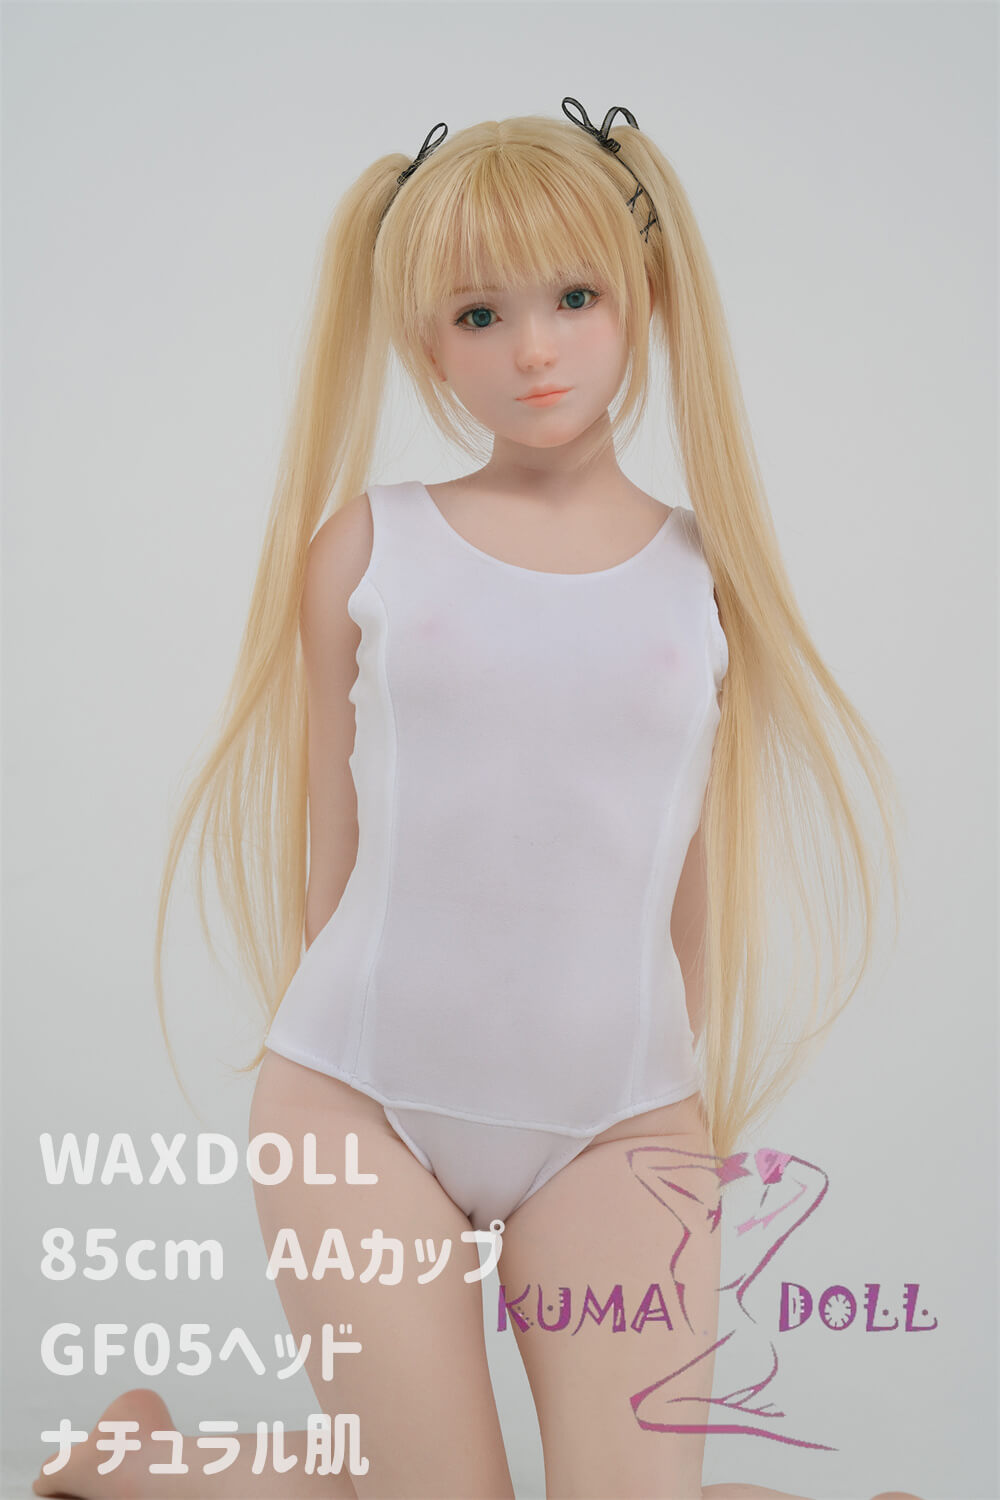 WAXDOLL 7kg Full Silicone Love doll 85cm/2ft8 flat breast doll #GF05 head with realistic make-up